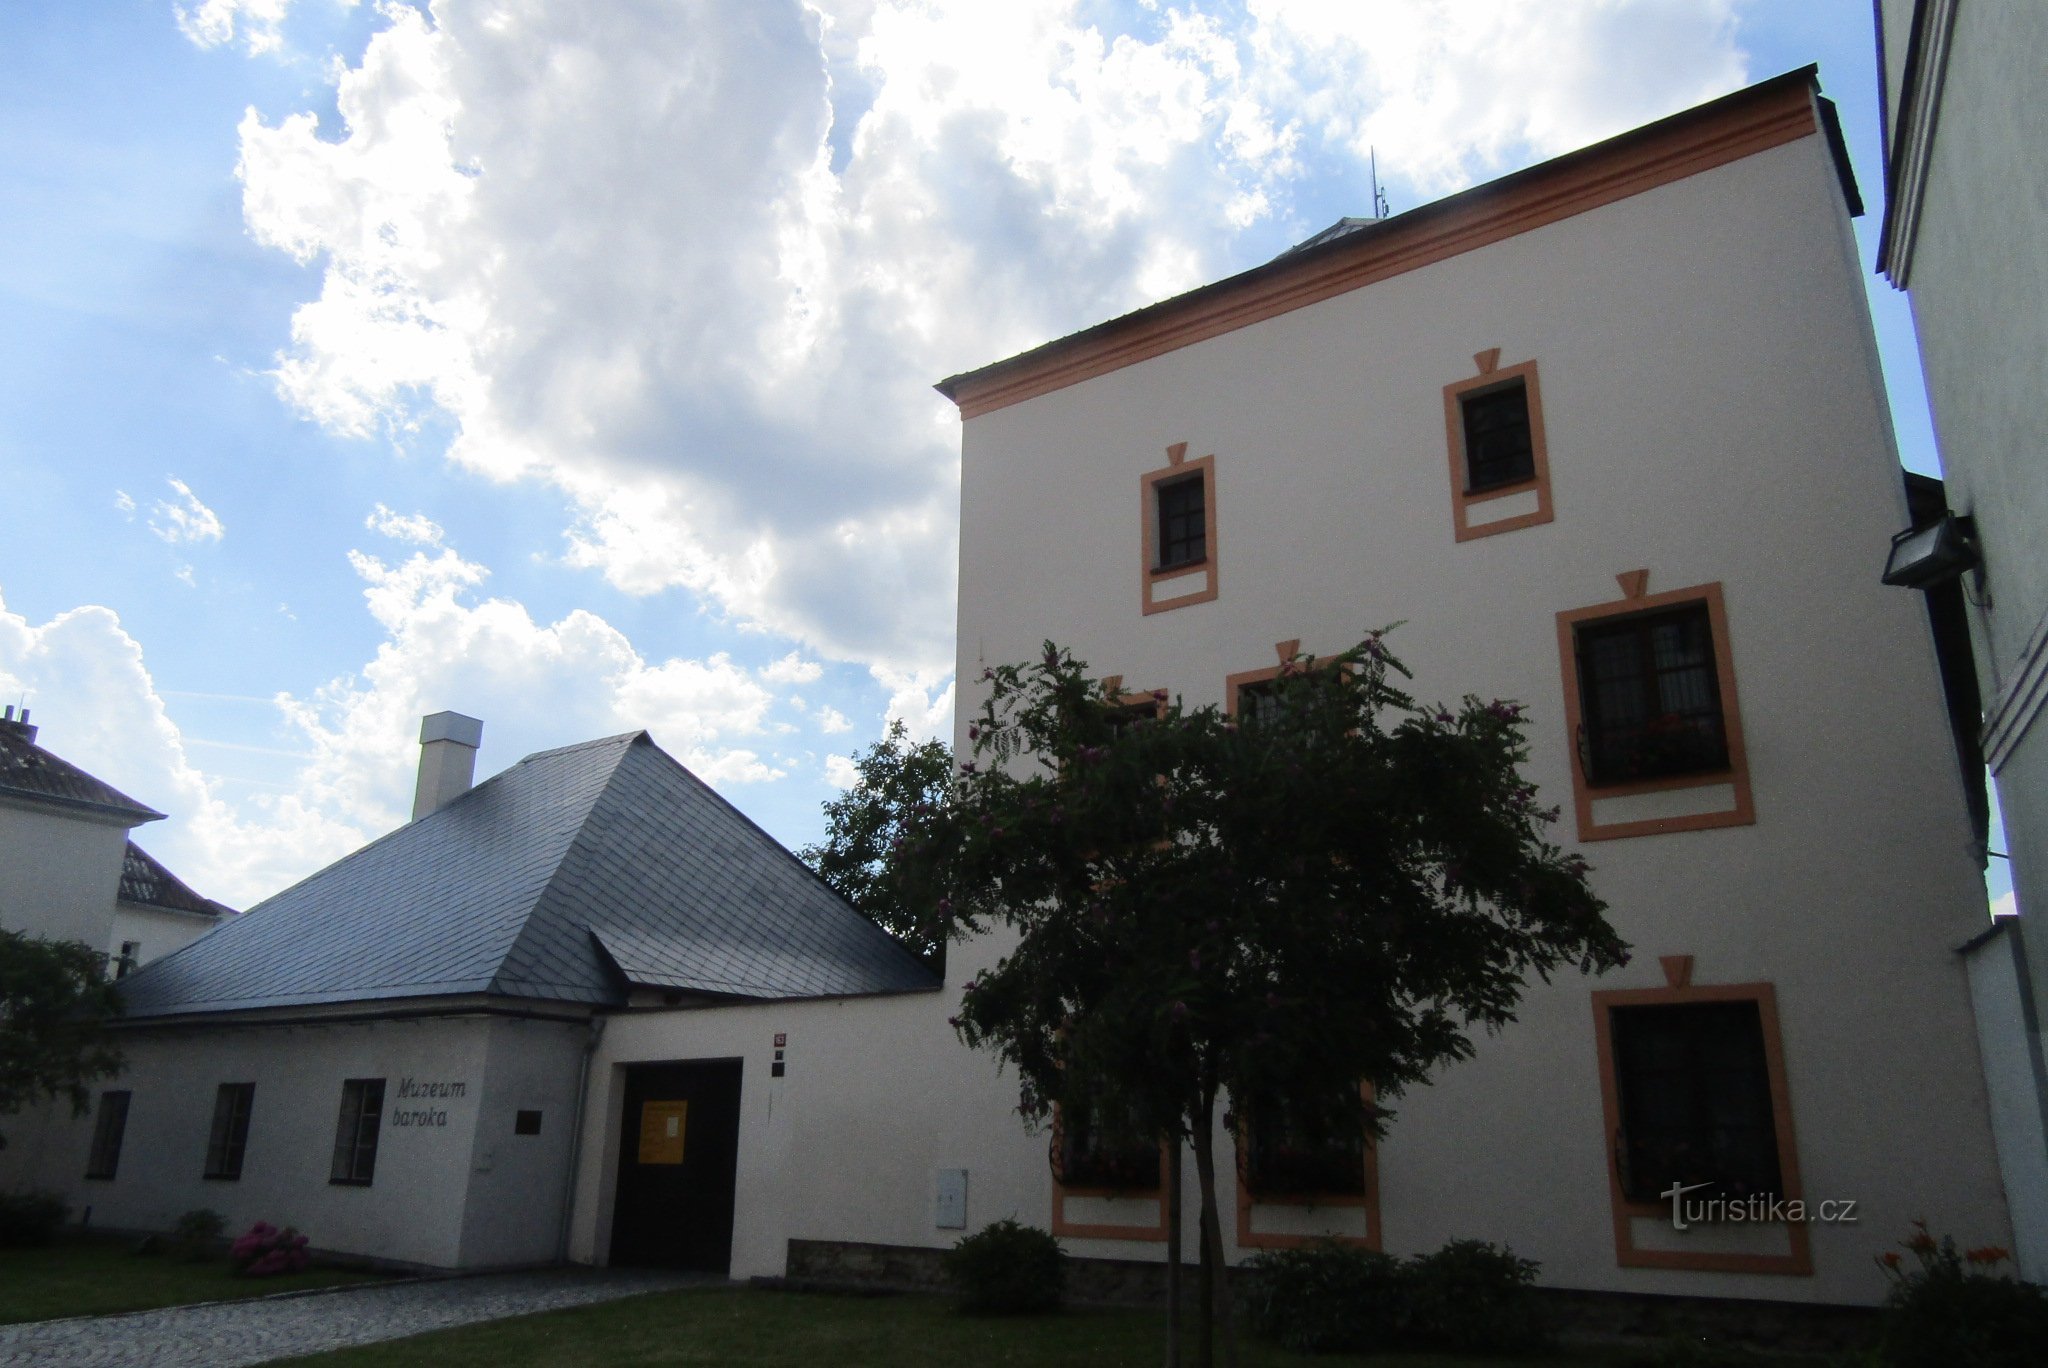 La muzeul din Uničov